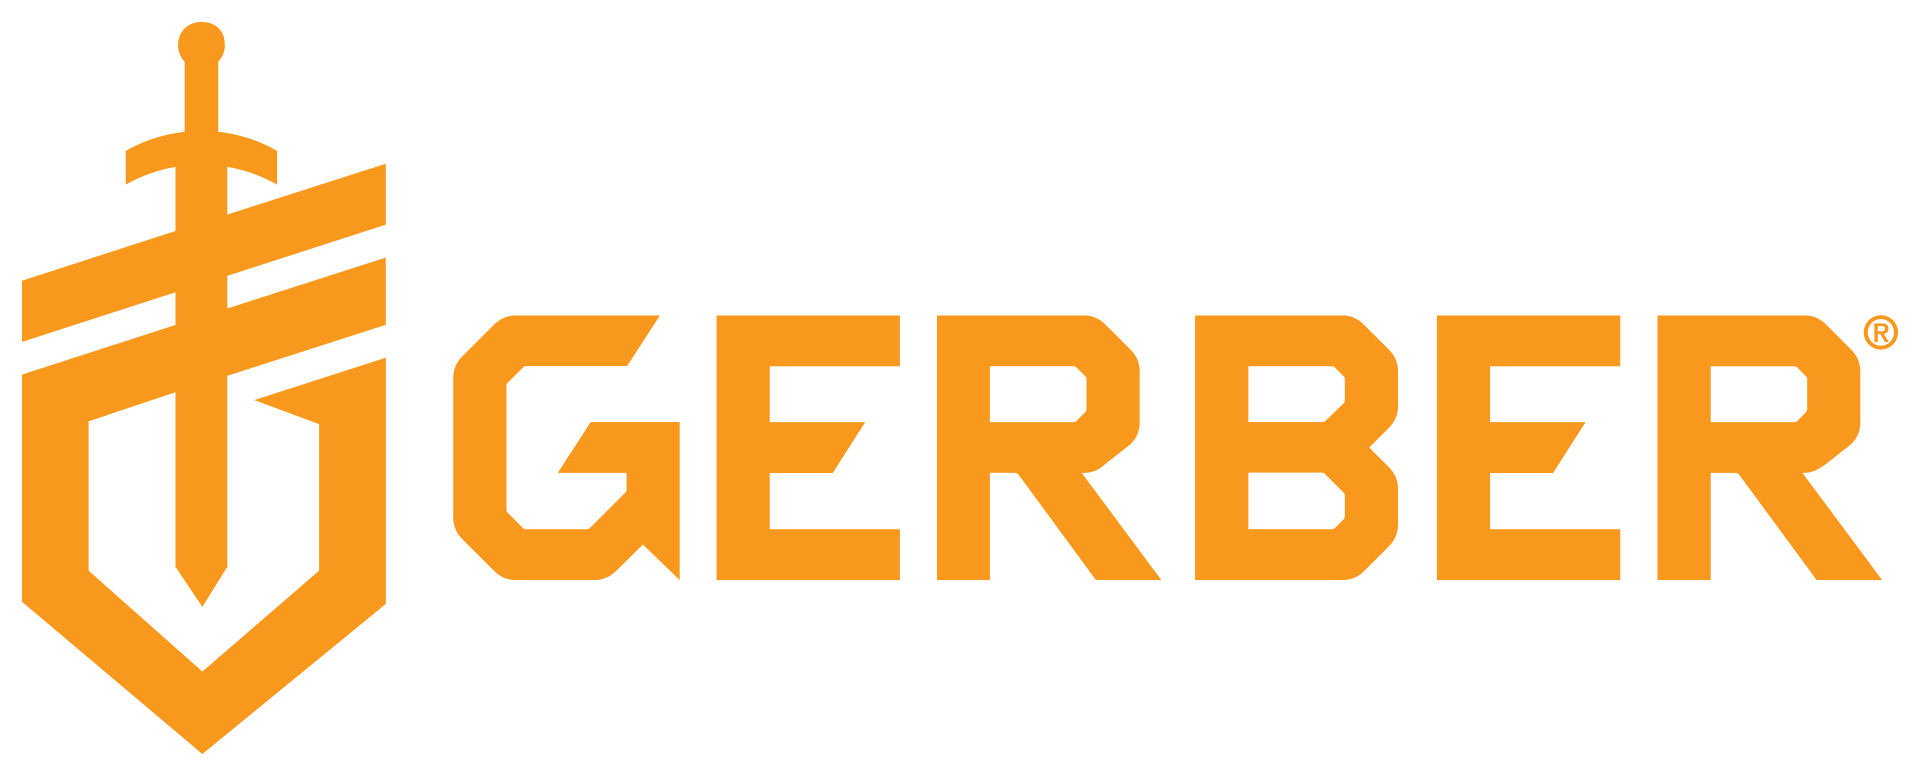 Gerber®